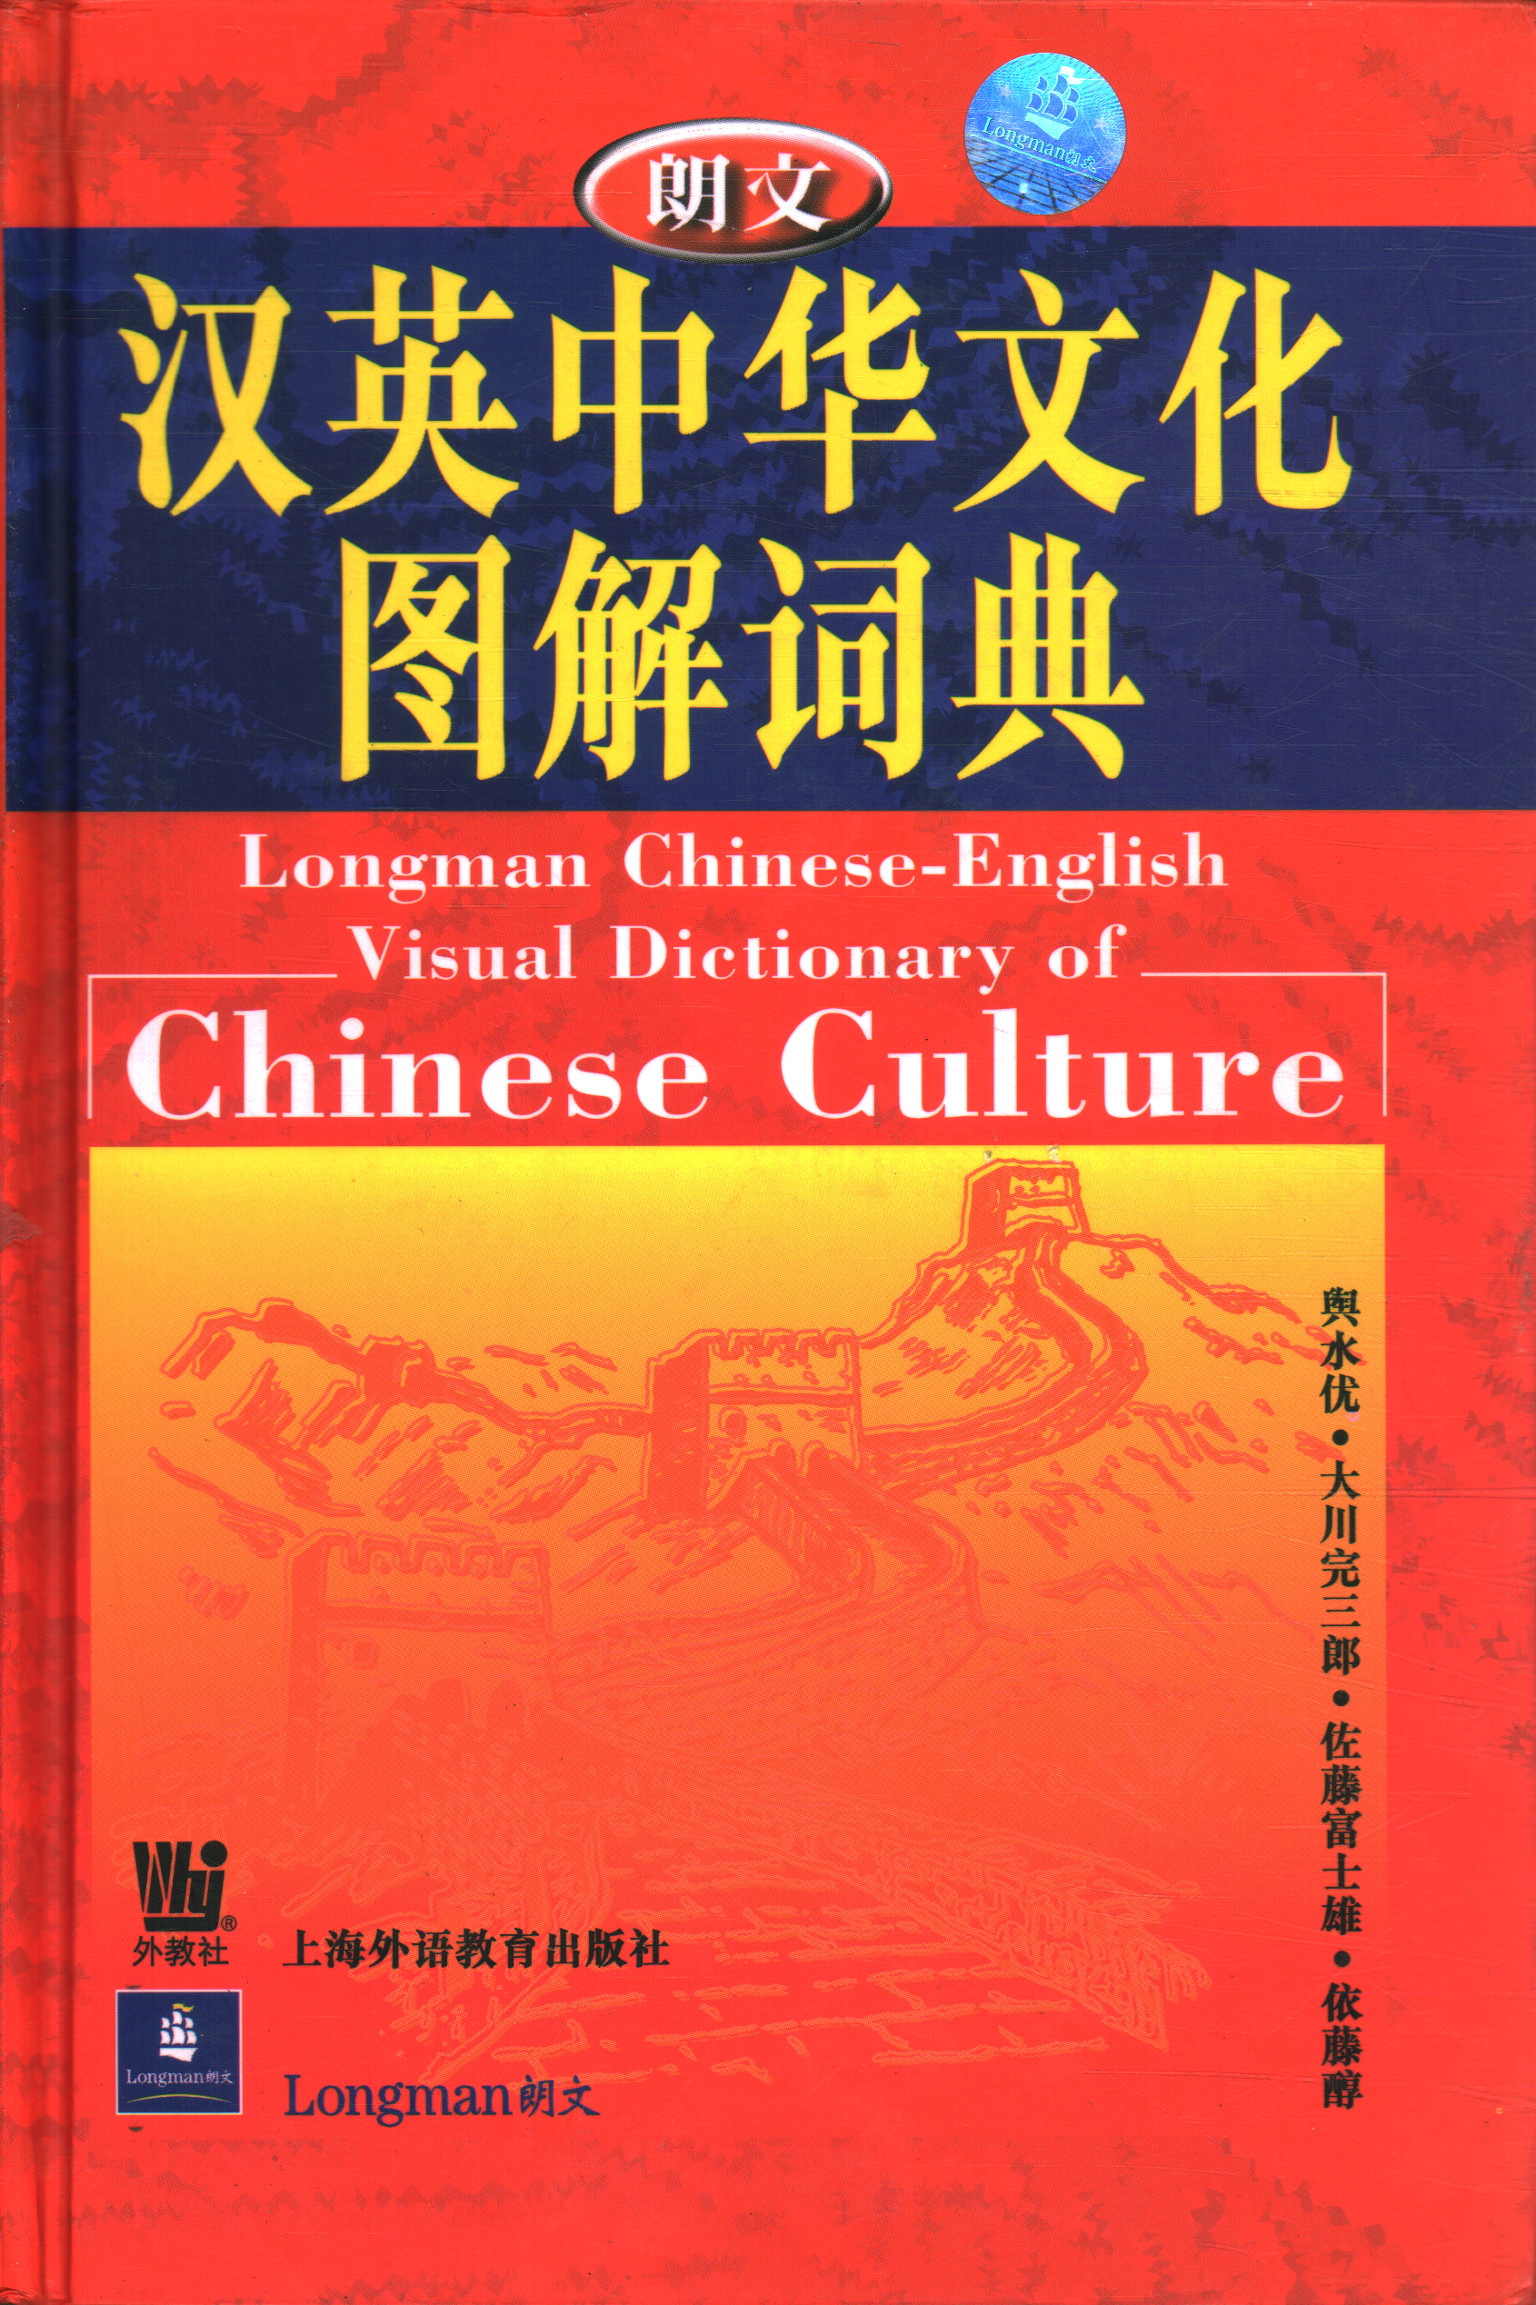 Longman Chinese-English Visual Dictionary